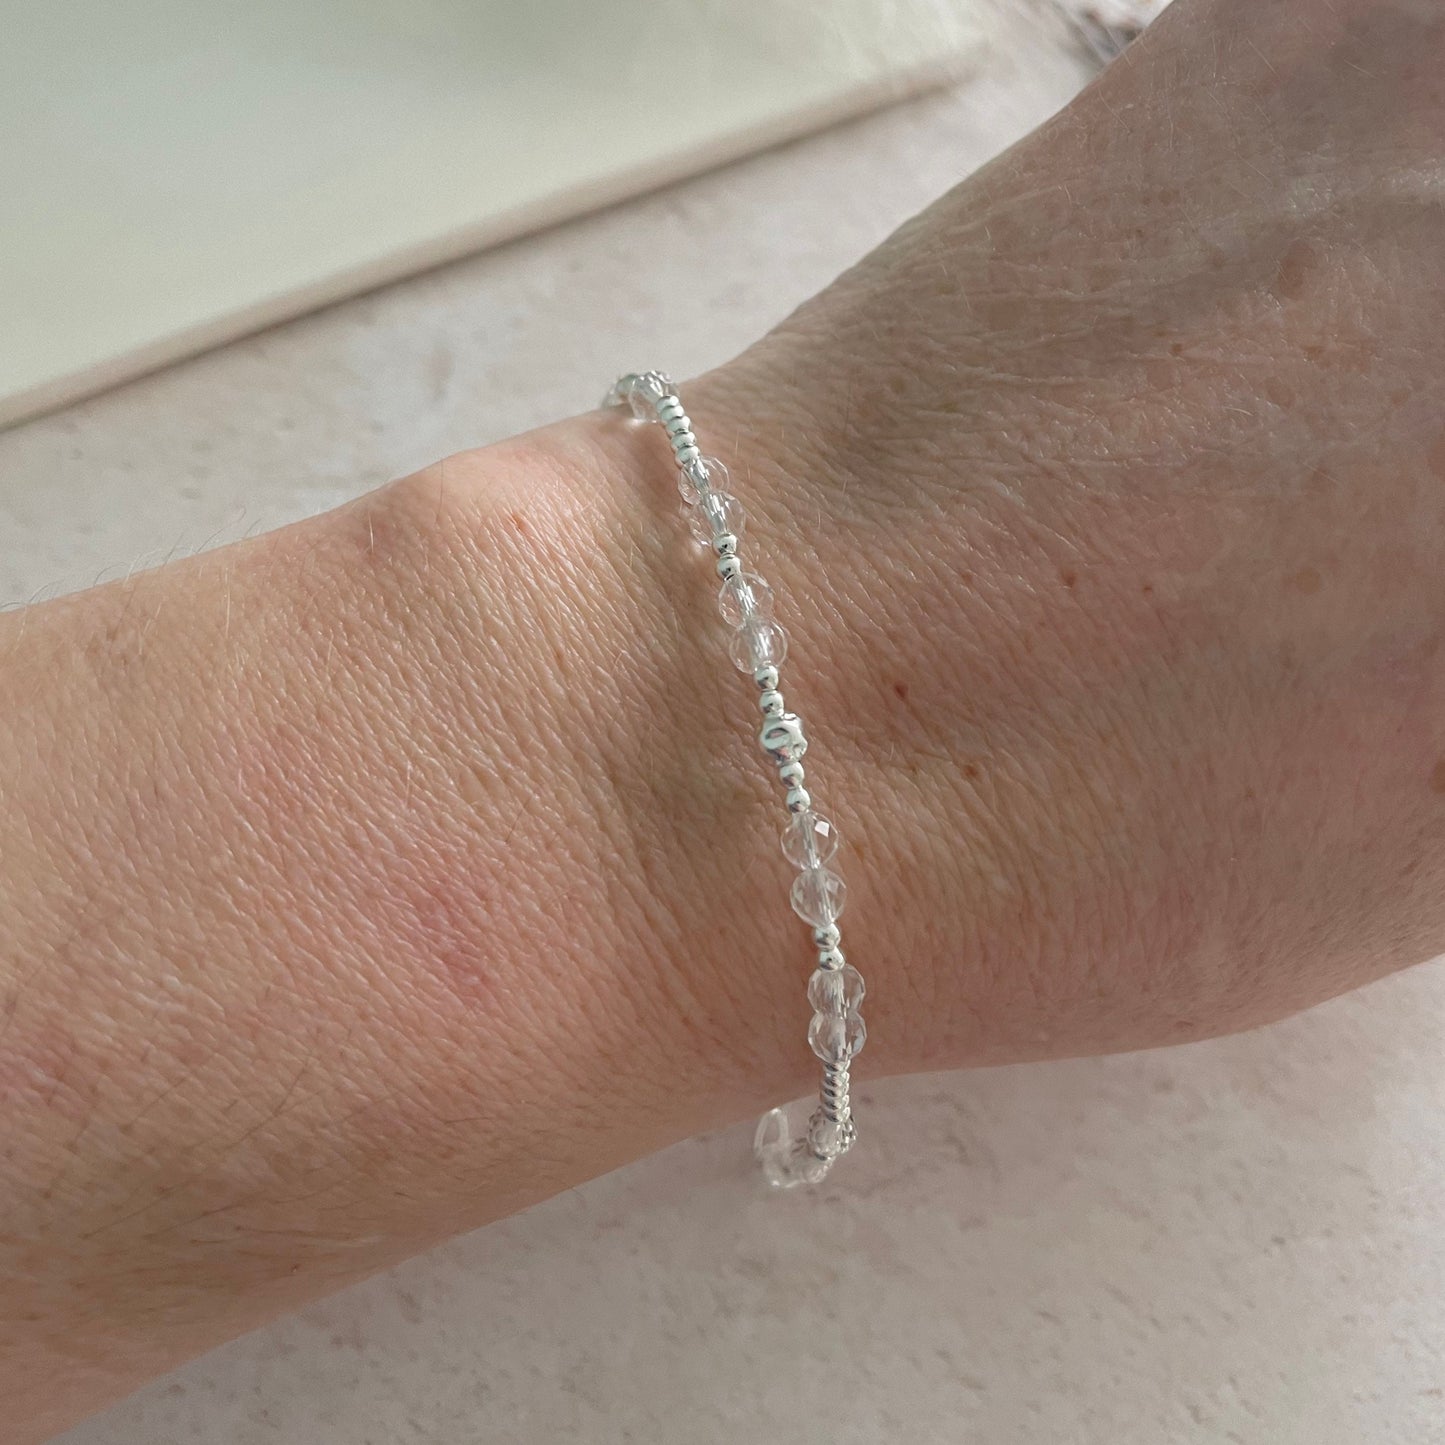 Clear Rock Quartz bracelet, April Birthstone Gift nft